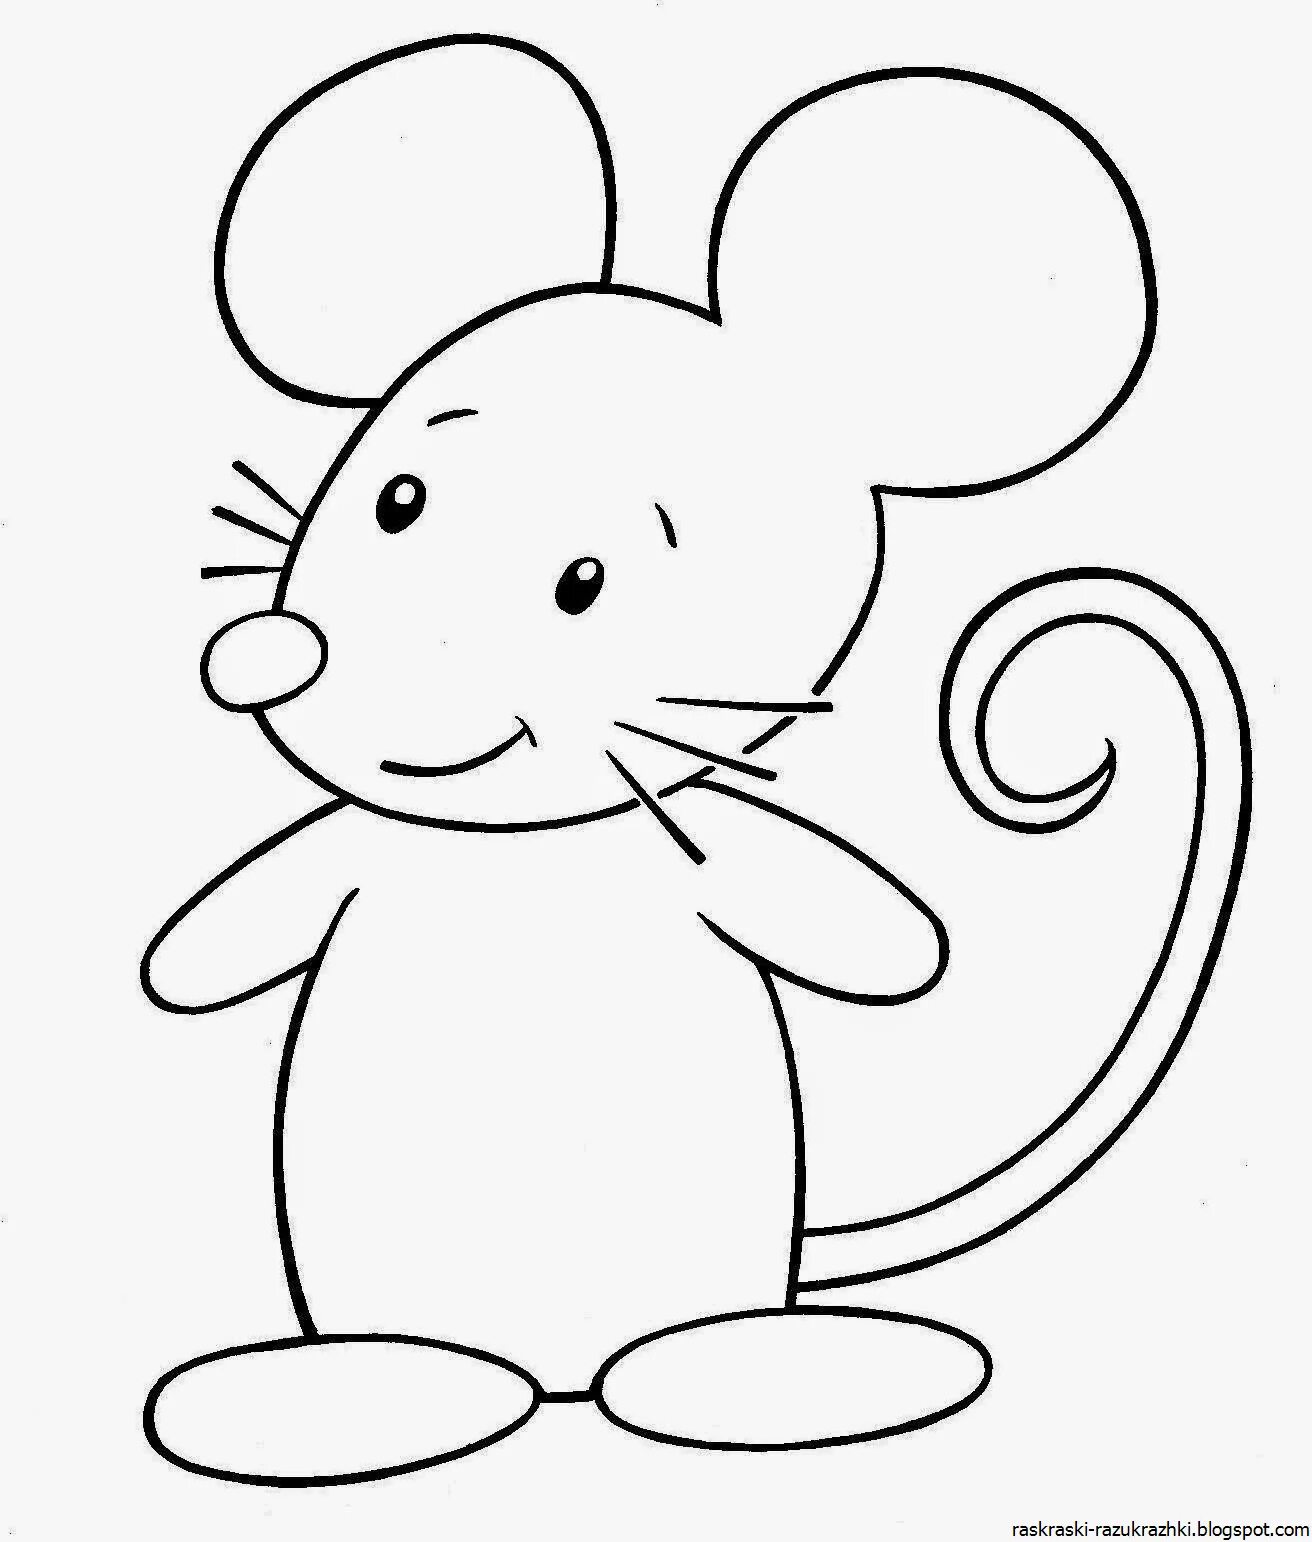 Раскраска мышка. Мышка раскраска для детей. Мышонок раскраска для детей. Мышка рисунок. Раскраска мышь распечатать